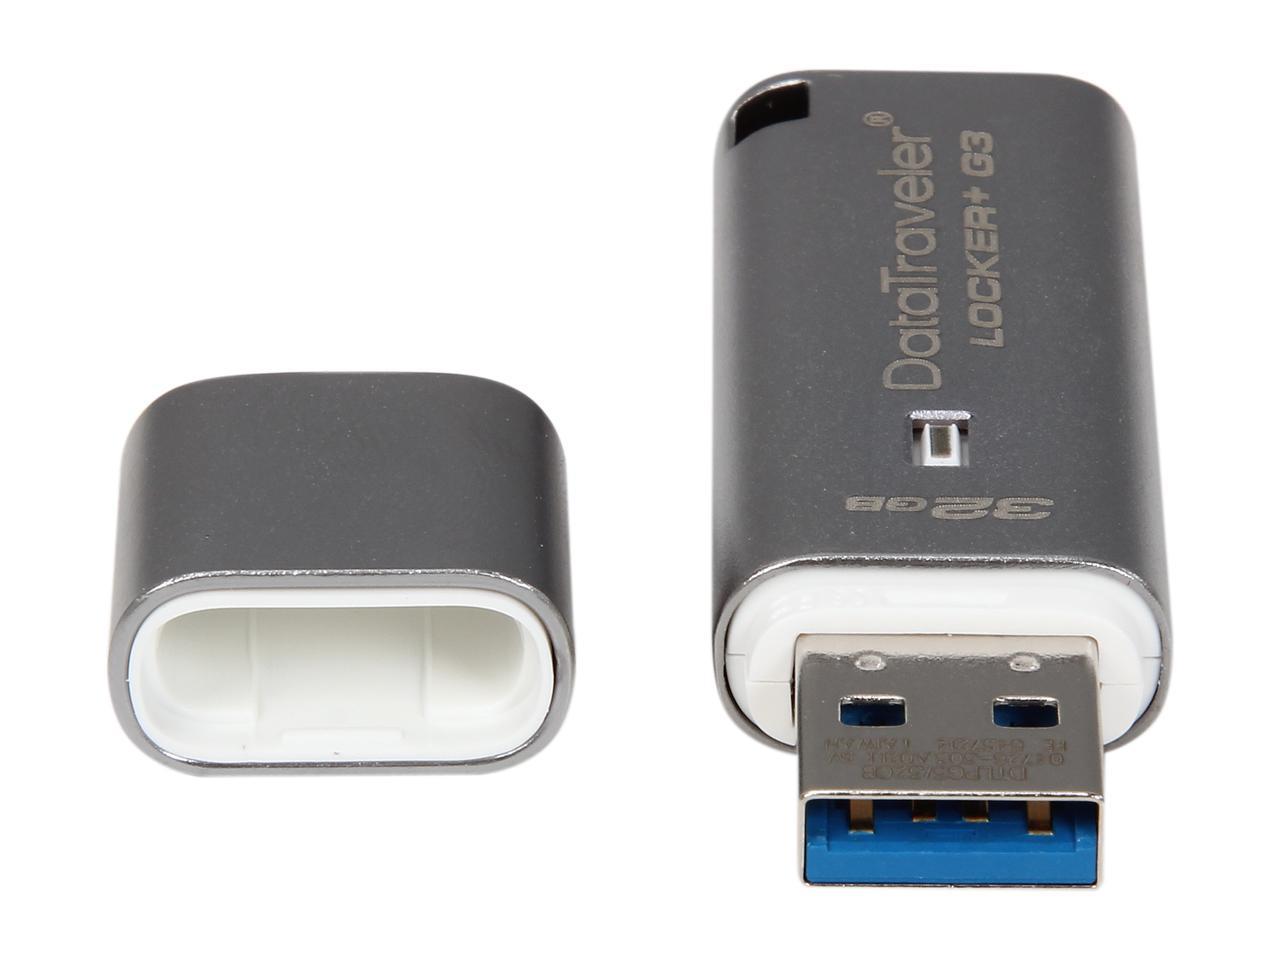 Kingston 32GB Data Traveler Locker + G3, USB 3.0 Flash Drive with Personal Data Security & Automatic Cloud Backup (DTLPG3/32GB)